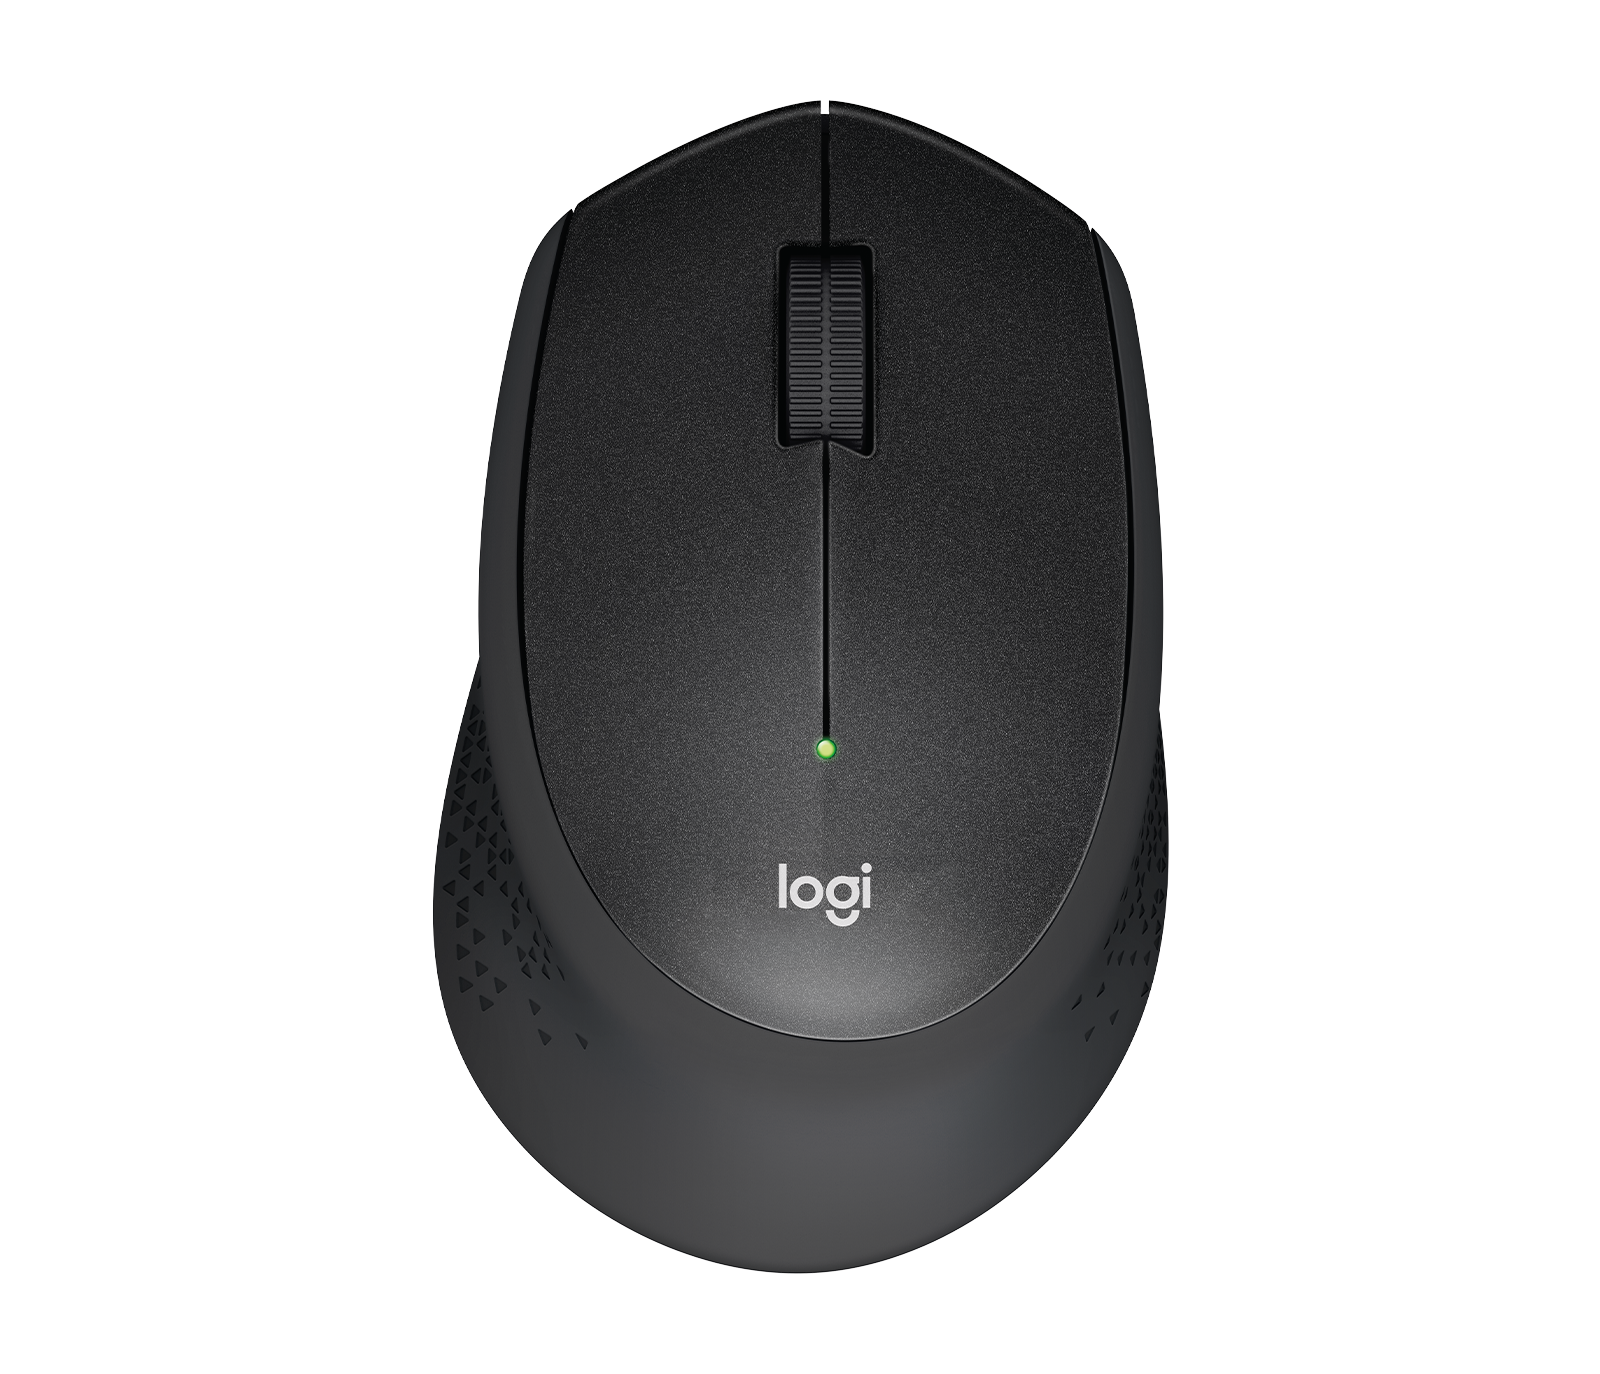 Logitech M330 Mause Mute Wireless Mouse Optical USB Gaming Computer Mice 